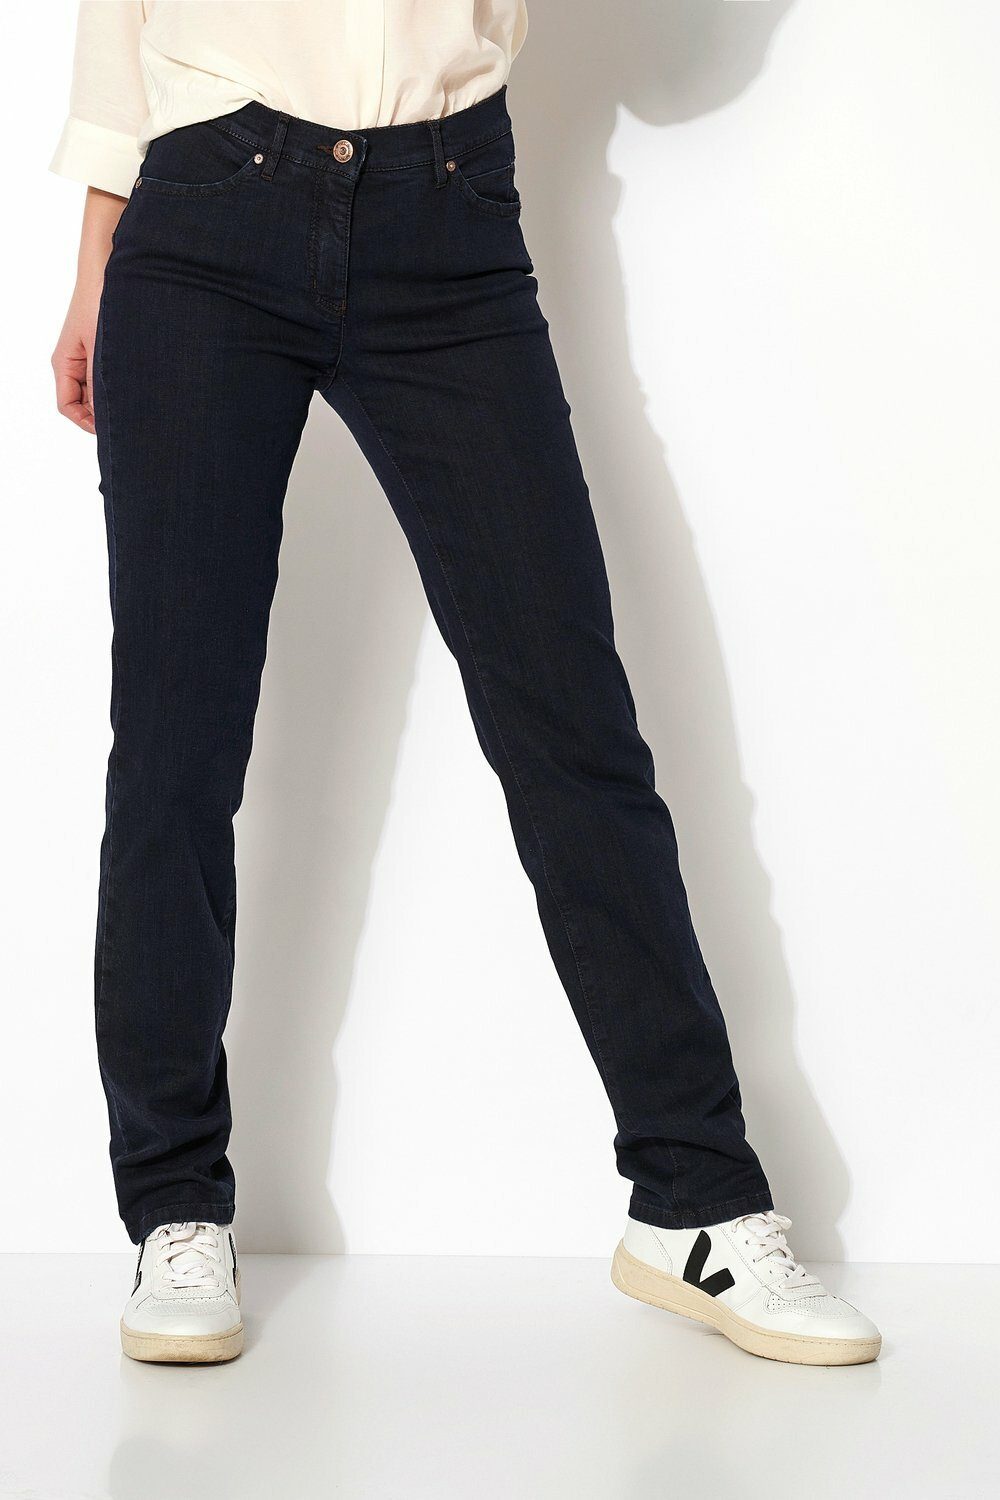 Günstige Toni Jeans für Damen kaufen » Toni Jeans SALE | OTTO